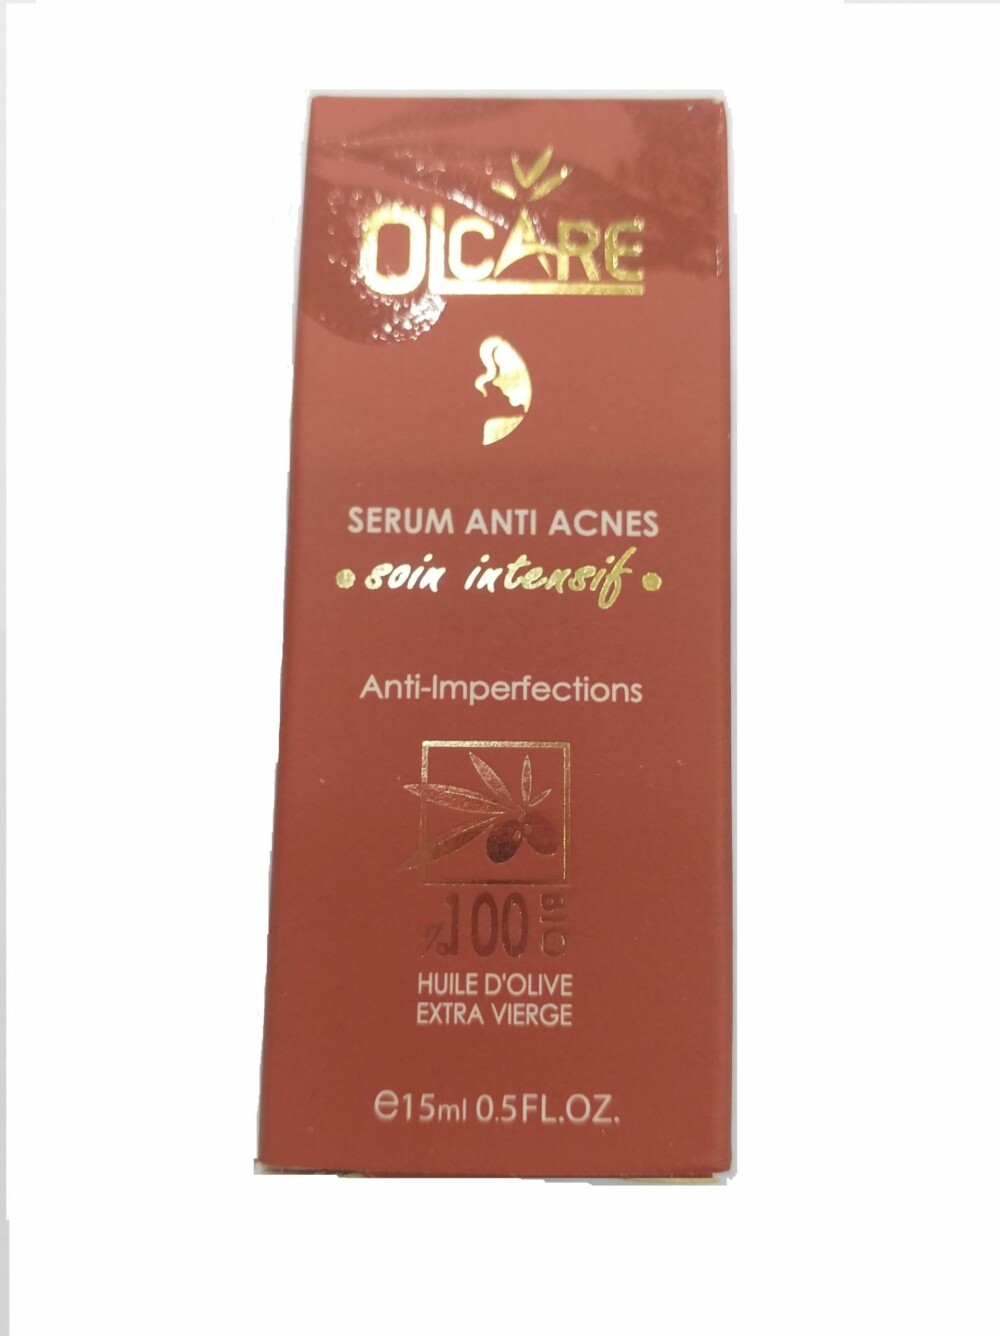 Olcare serum anti acnes 15ml scaled 1